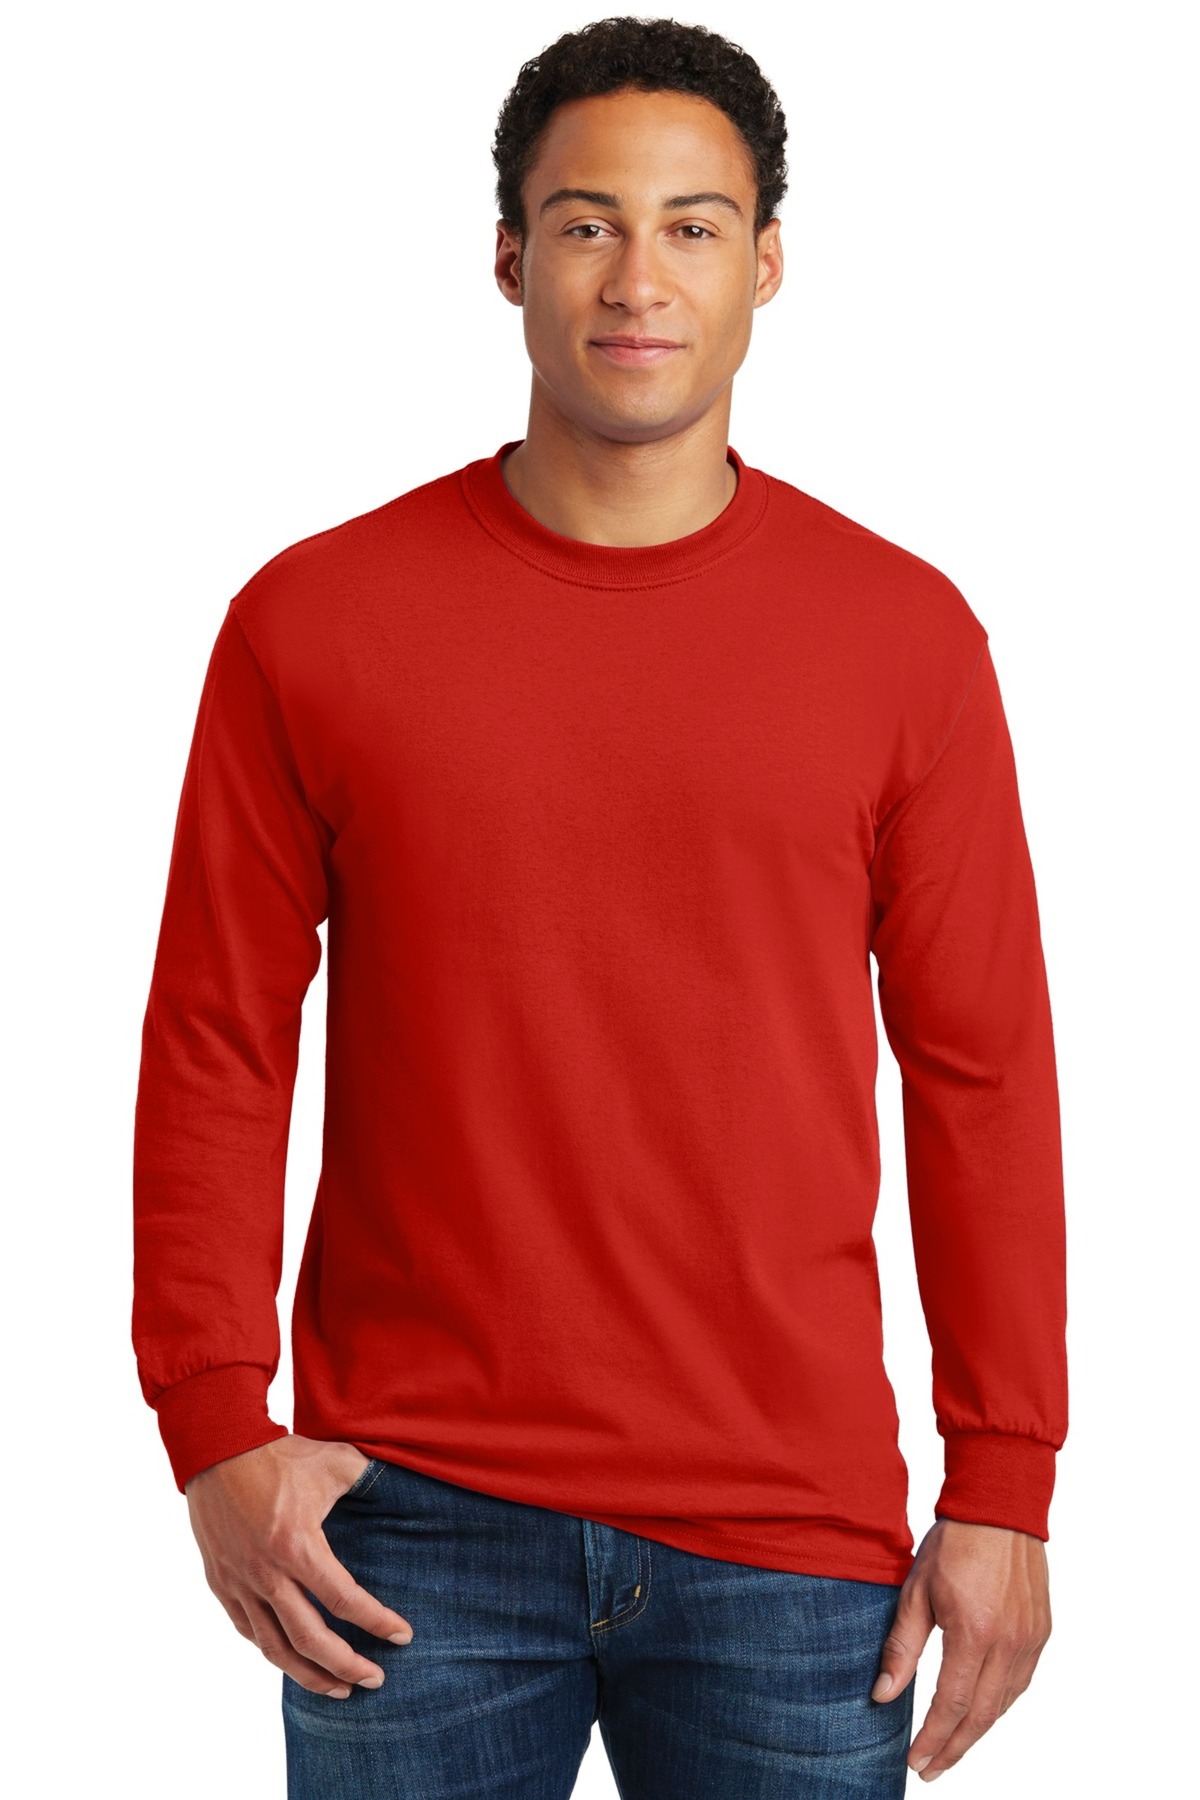 Gildan Printed Men's Heavy Cotton Long Sleeve T-Shirt | All Products ...